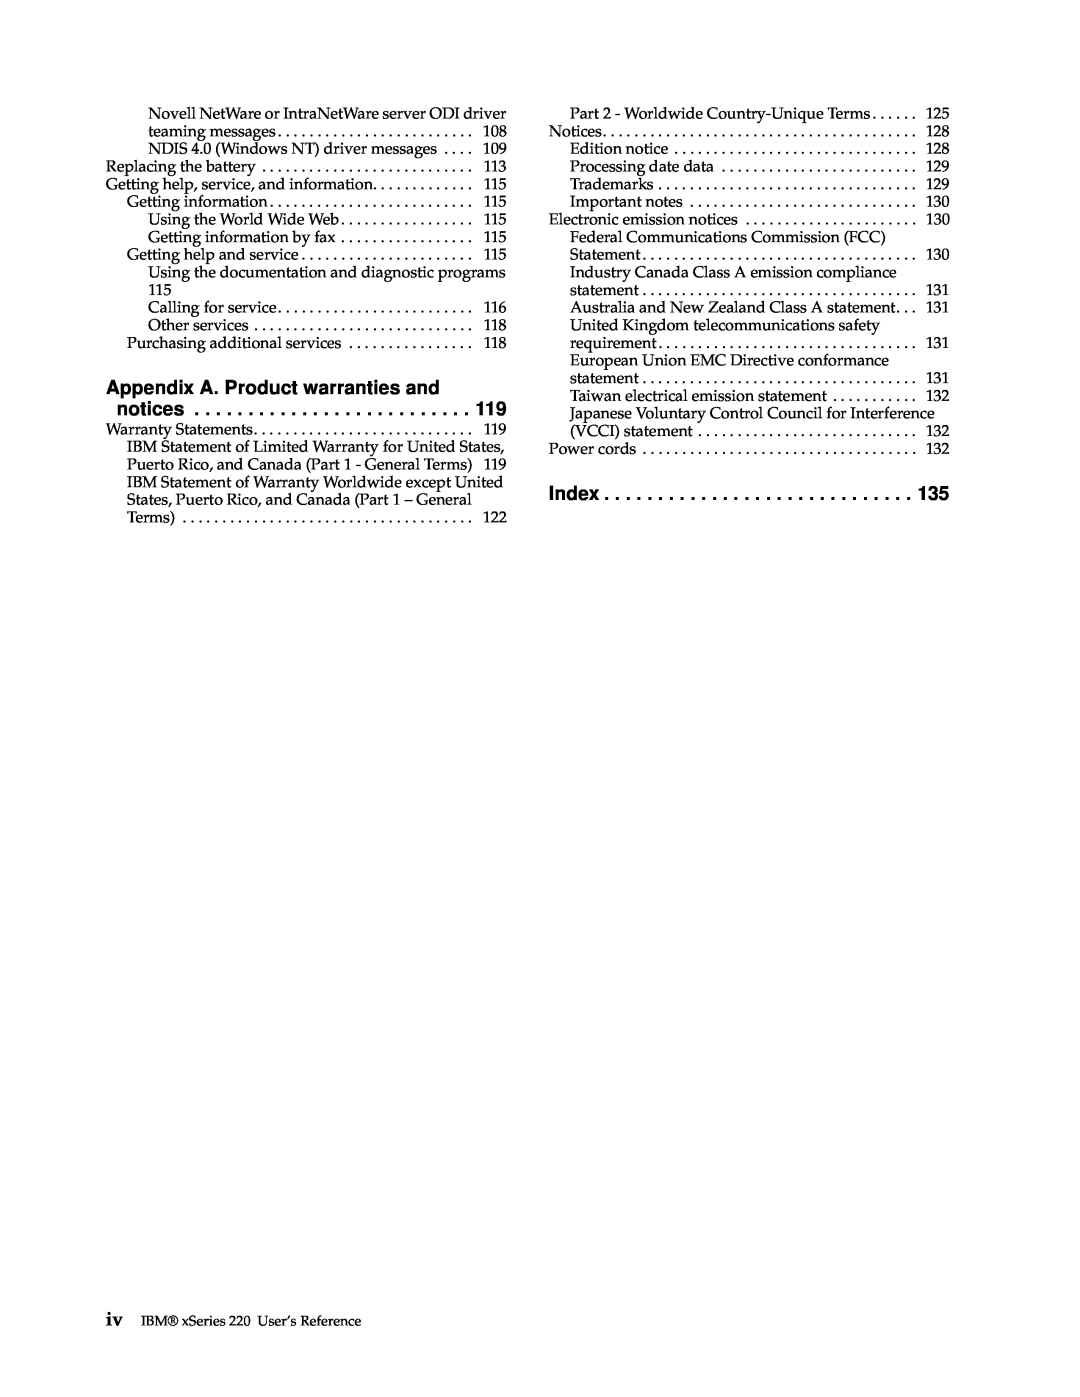 IBM 220 manual Appendix A. Product warranties and notices, Index 